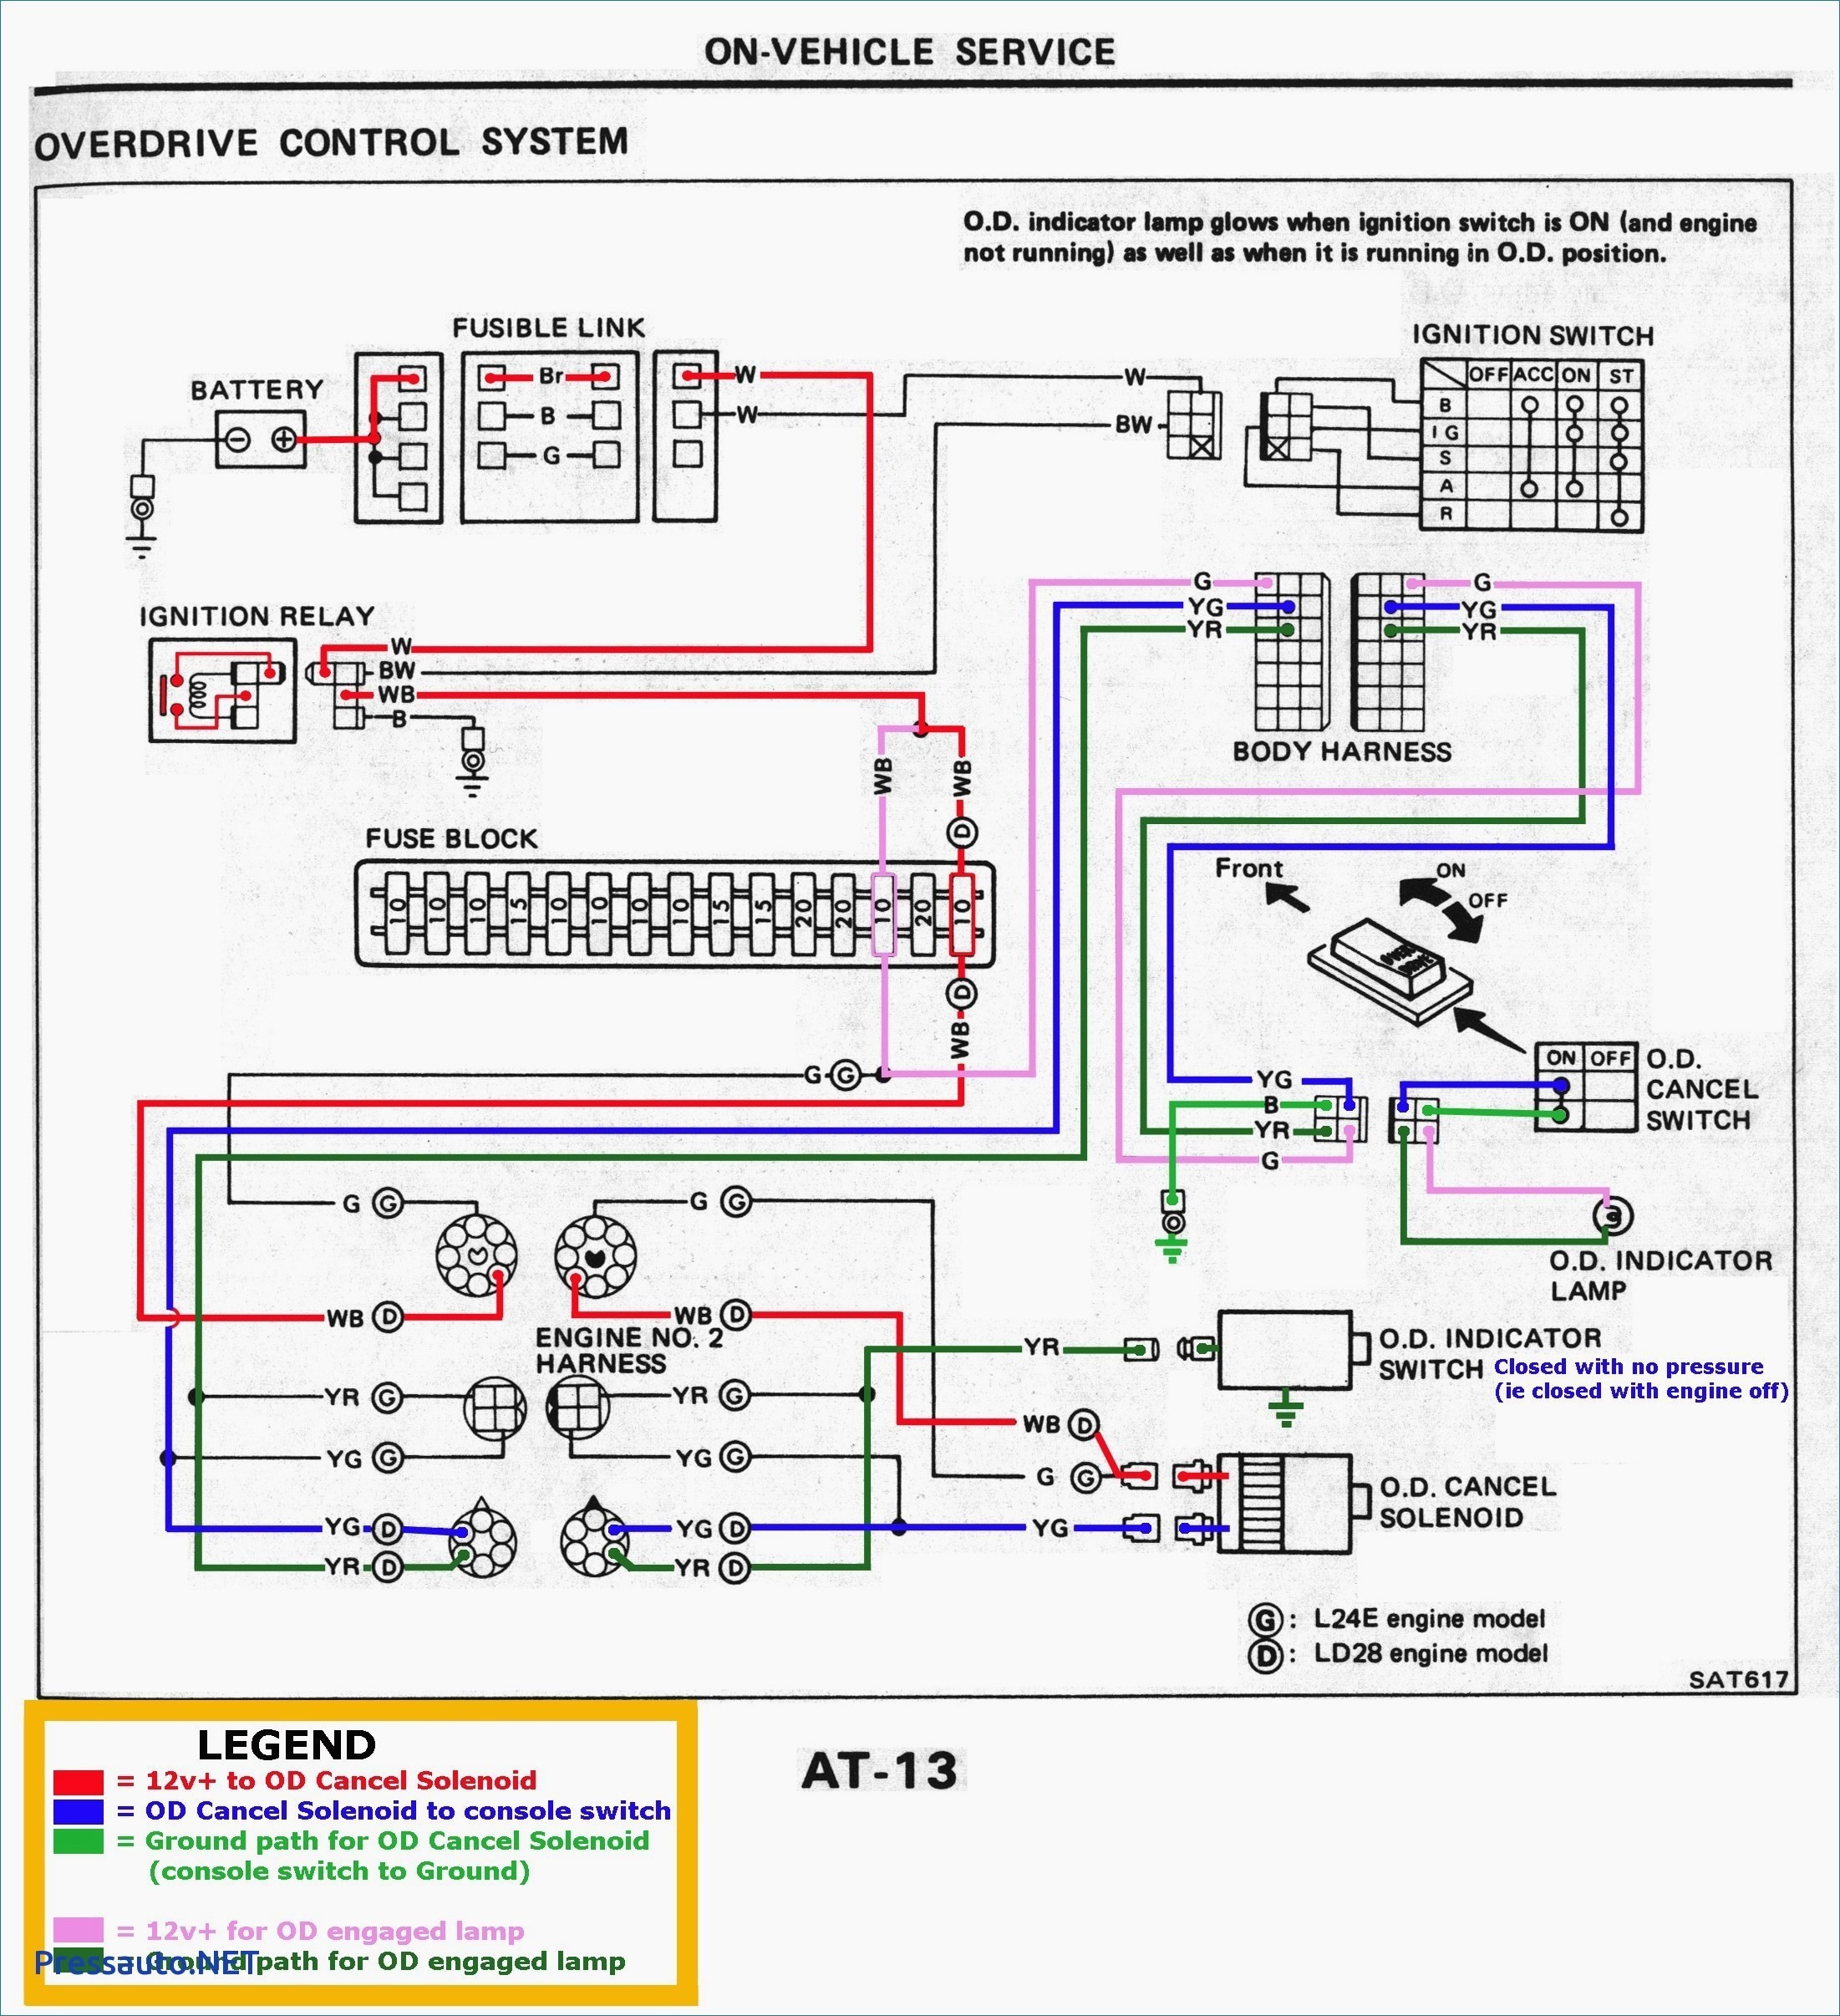 Toyota 1nz Fe Engine Wiring Diagram Wiring Diagram toyota Great Corolla Best toyota Wiring Diagrams Of Toyota 1nz Fe Engine Wiring Diagram